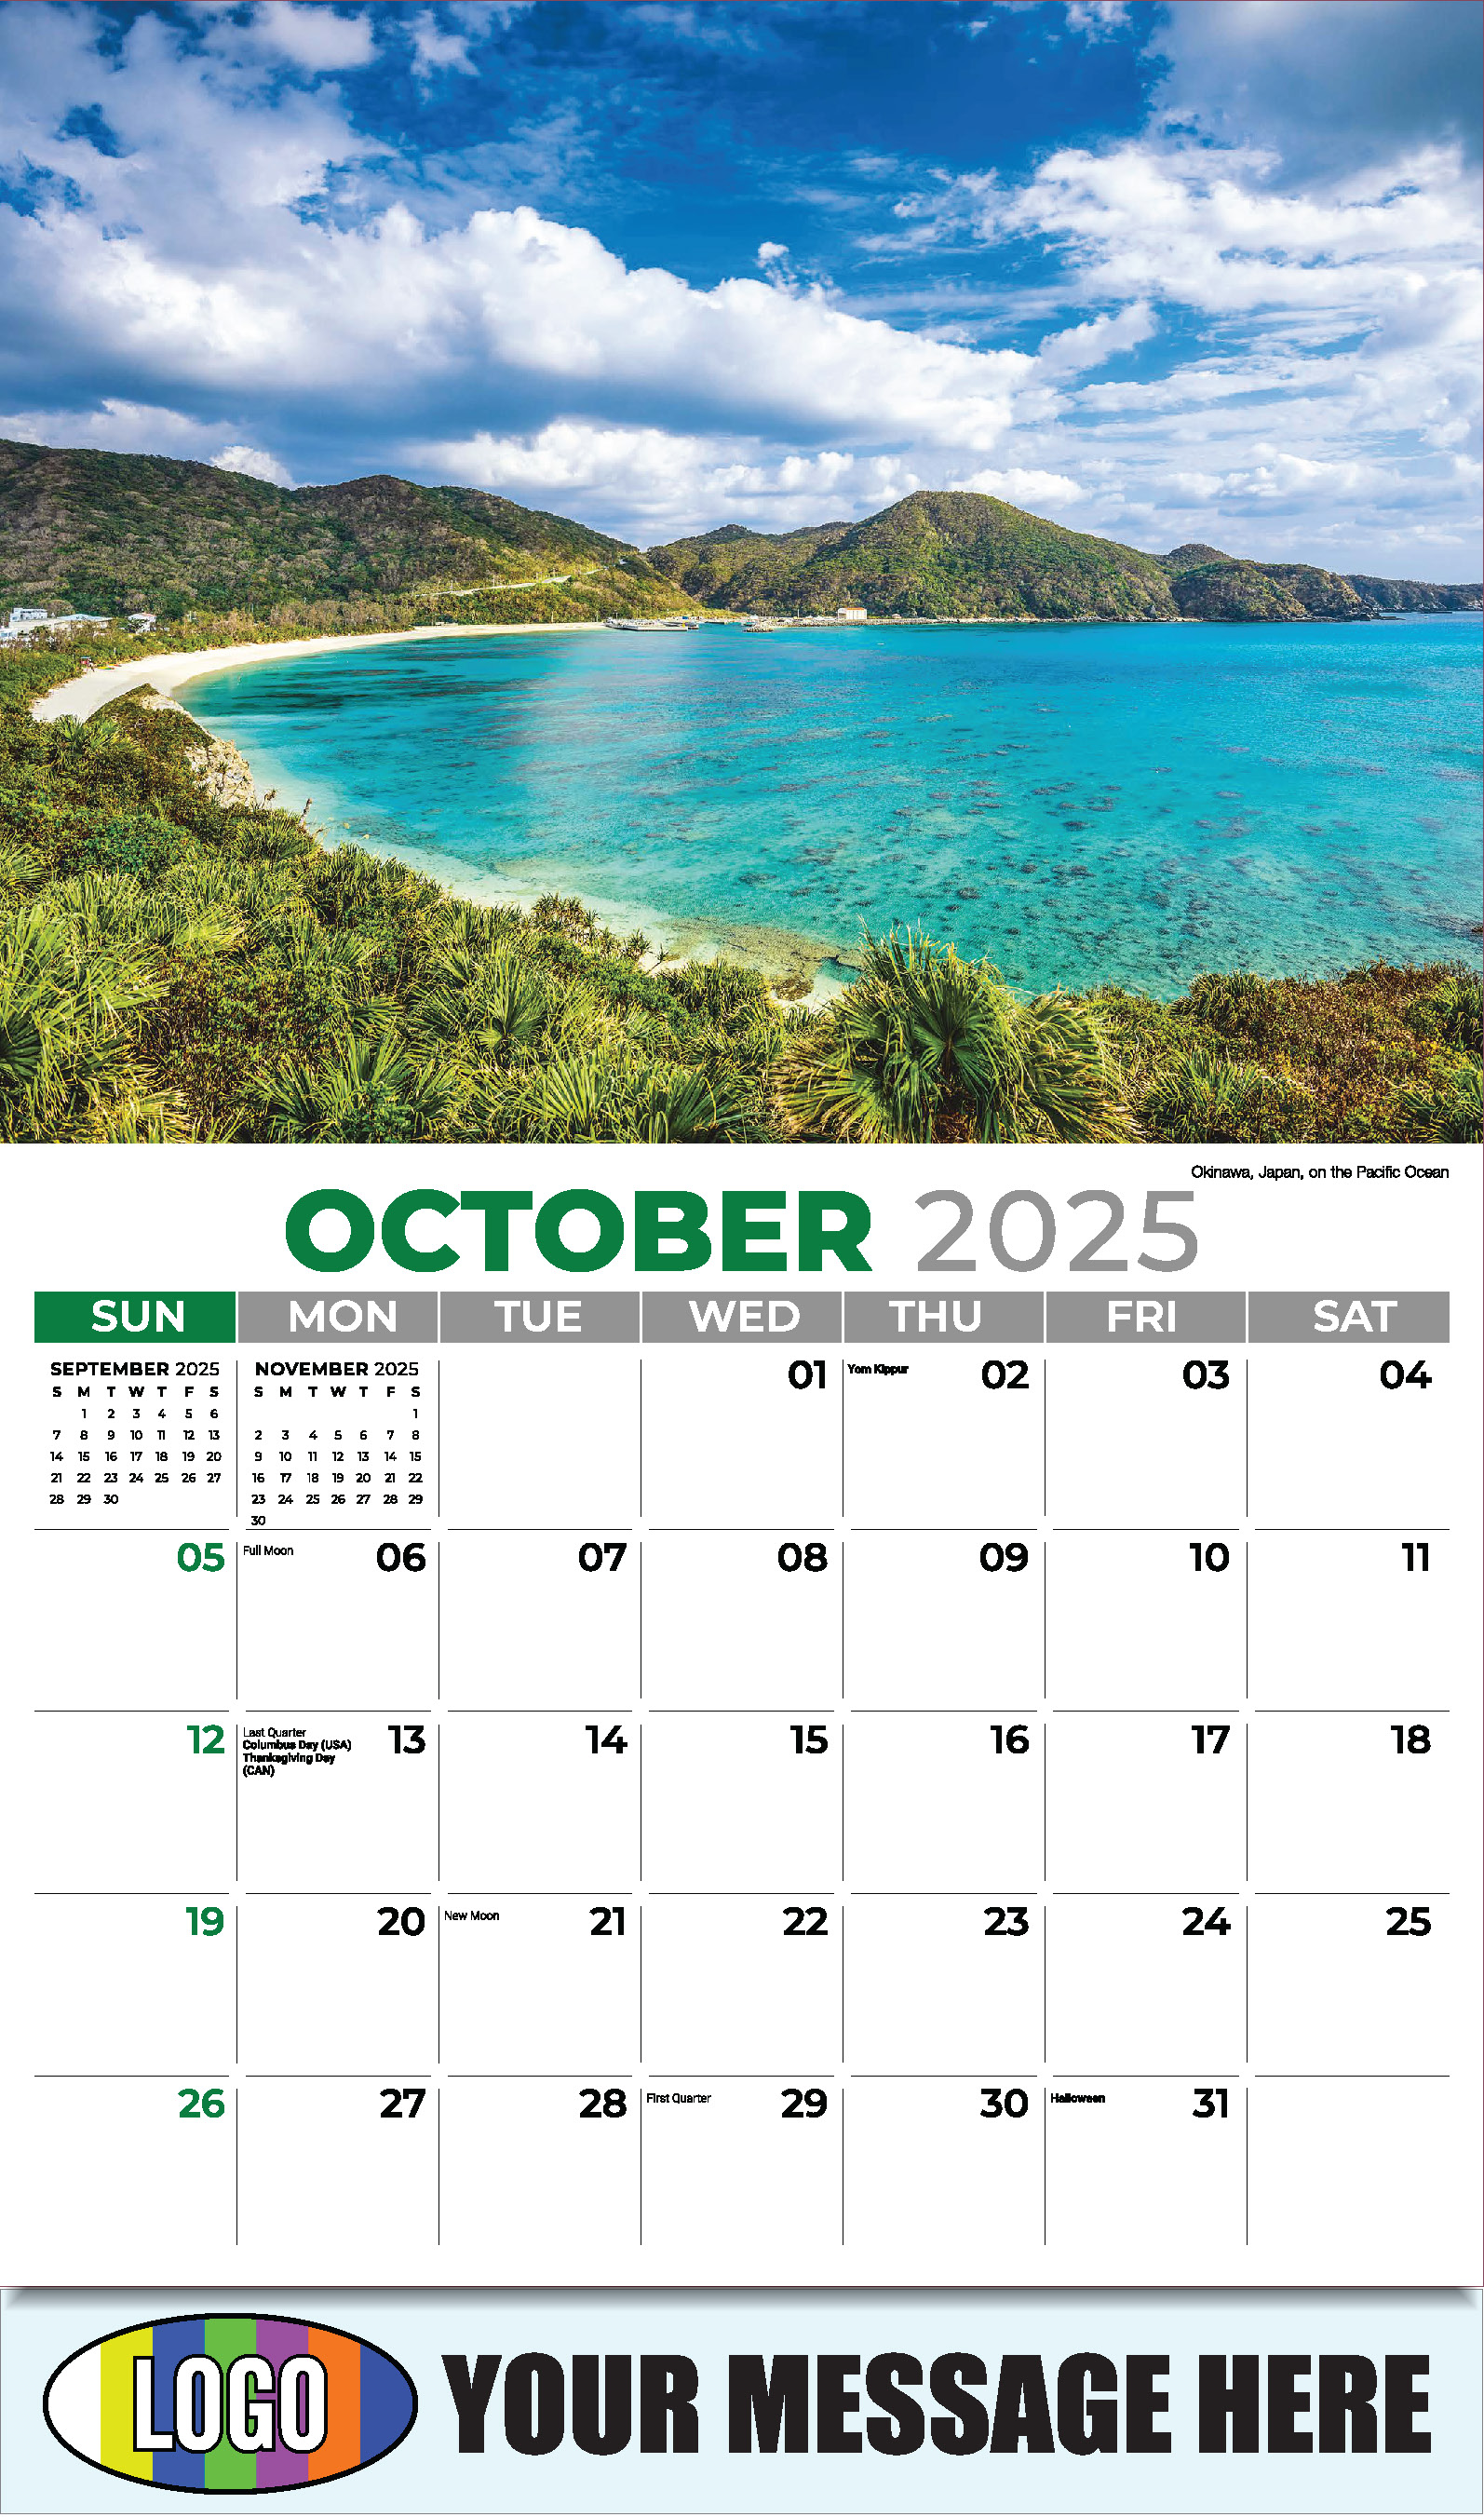 Sun, Sand and Surf 2025 Business Advertsing Wall Calendar - October